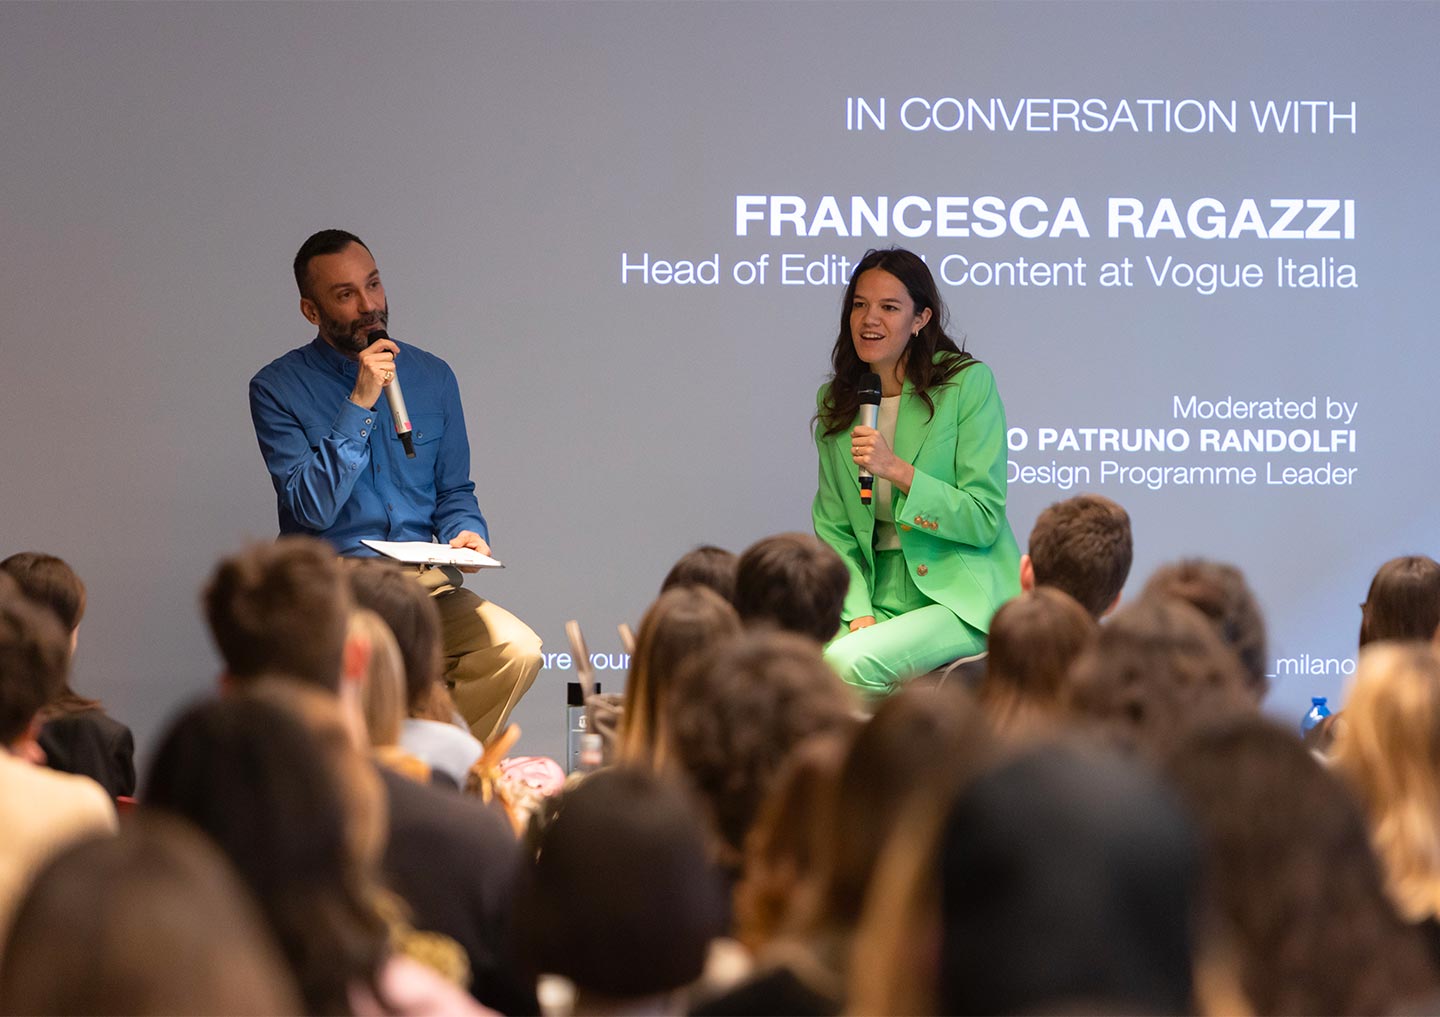 Francesca Ragazzi, Head of Editorial Content for Vogue Italia, at Istituto Marangoni Milano